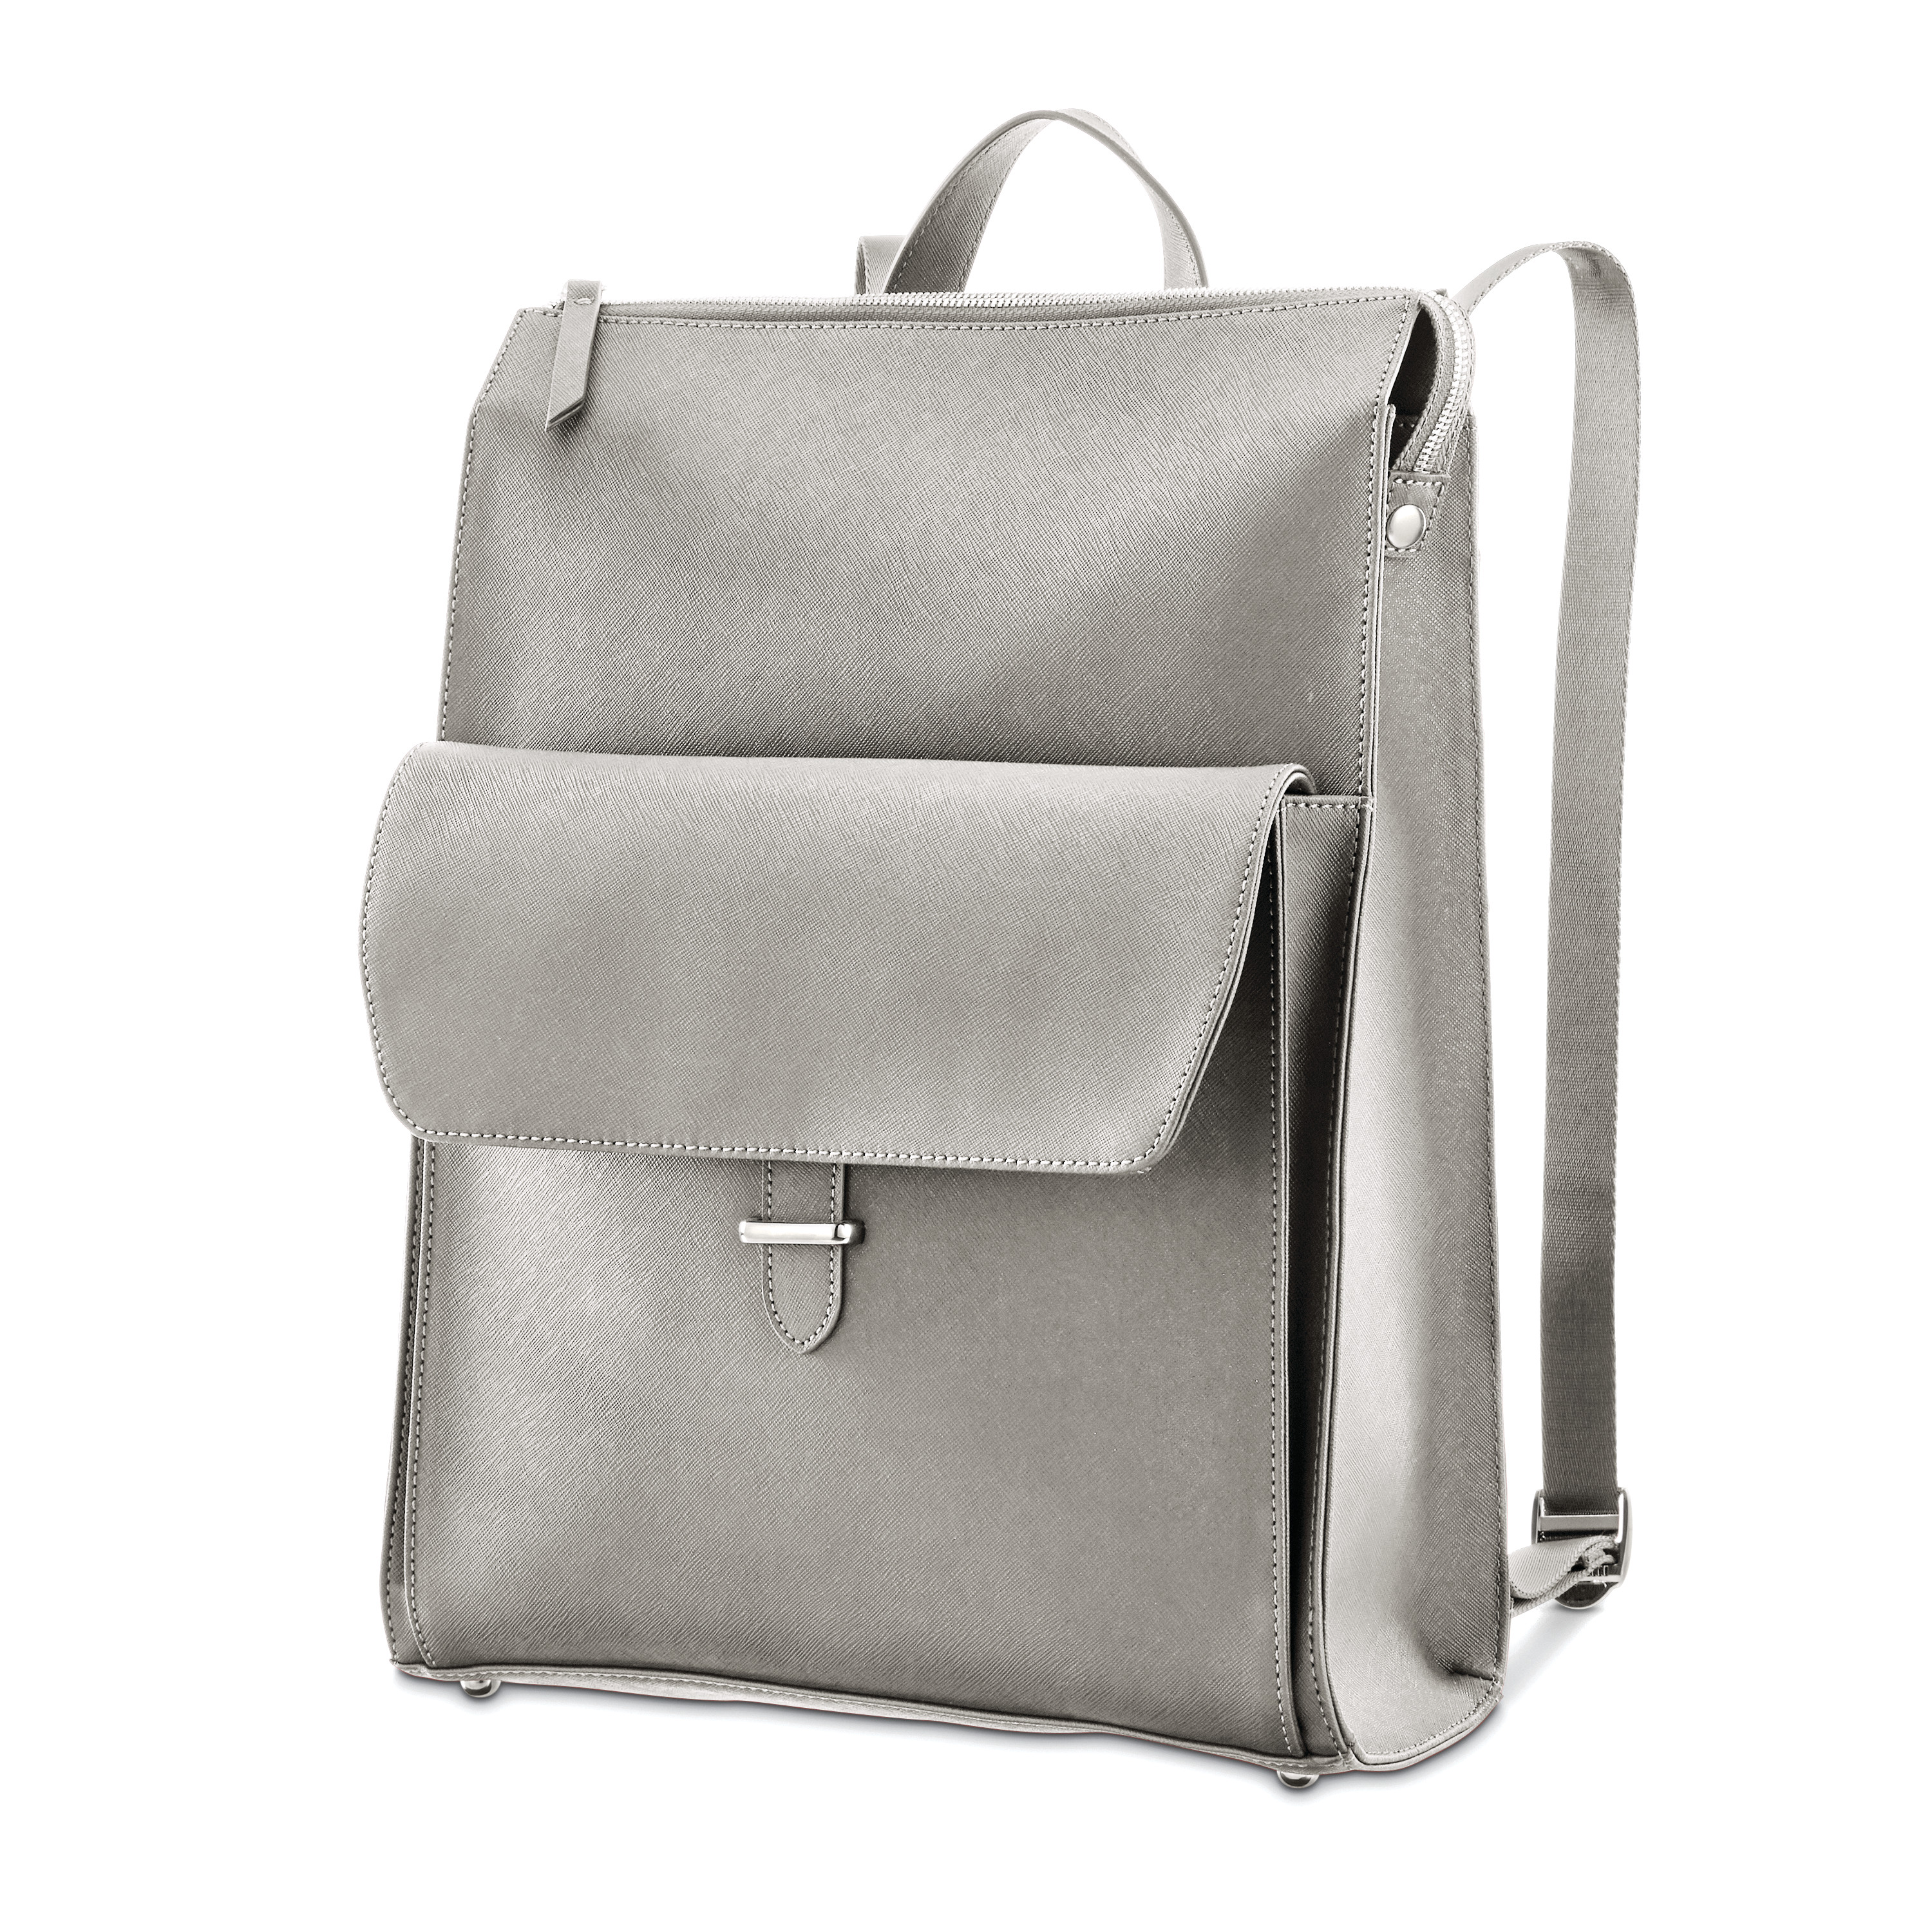 Twenty Four 2Pcs Set Checkered Backpacks For Women's Fashion Pu Leather Bag  Multipurpose Design Convertible Satchel Bag For Travel School 